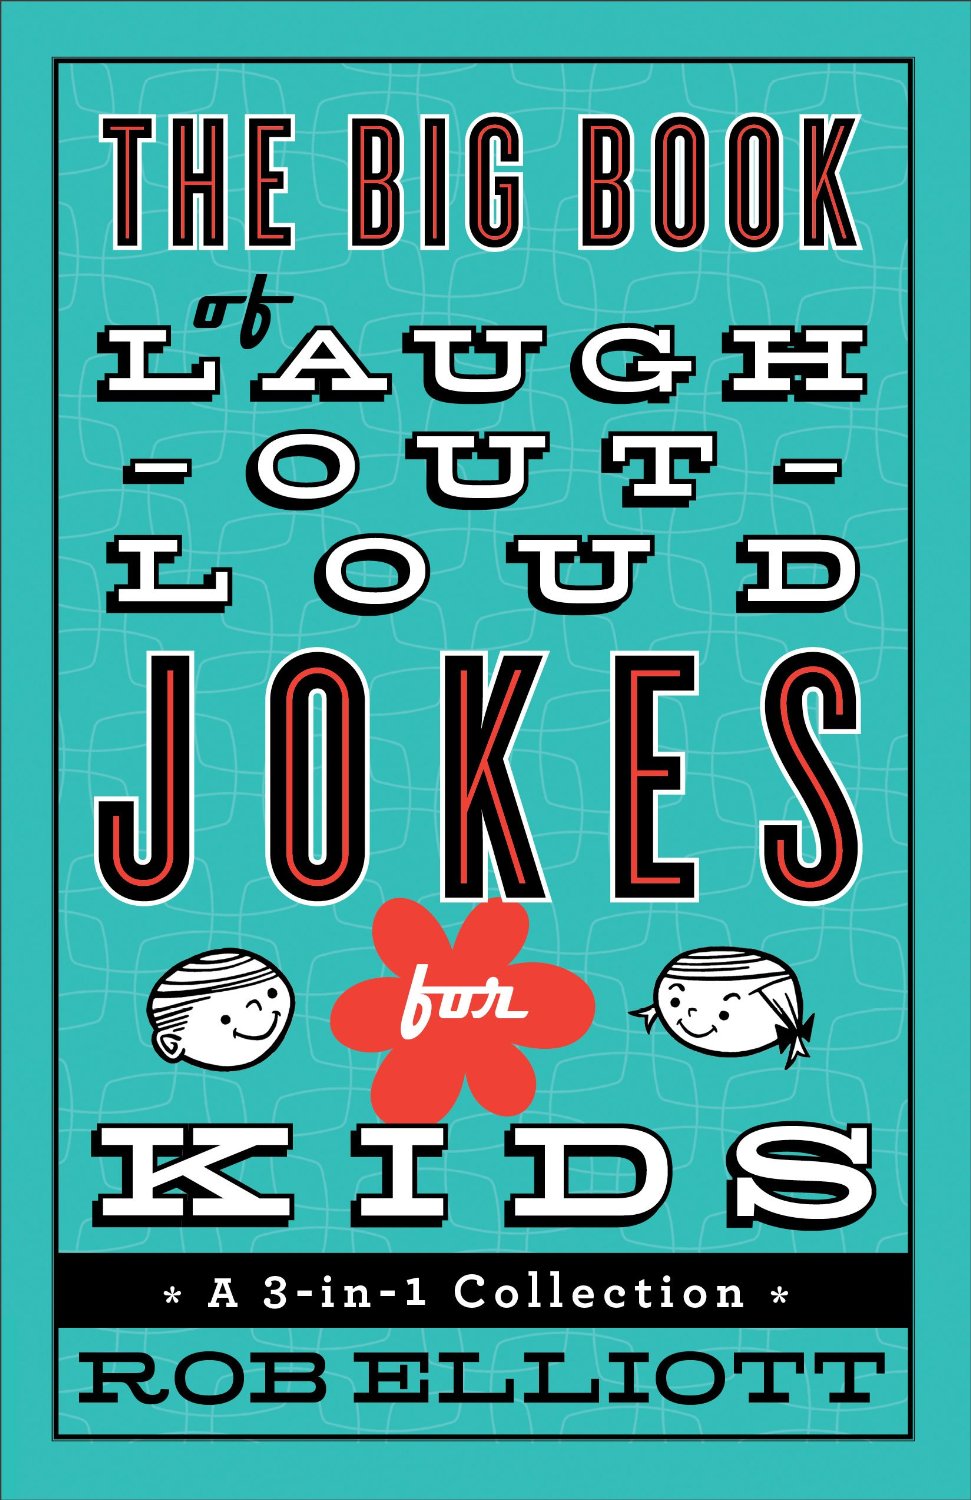 Joke Books for April Fools' Day